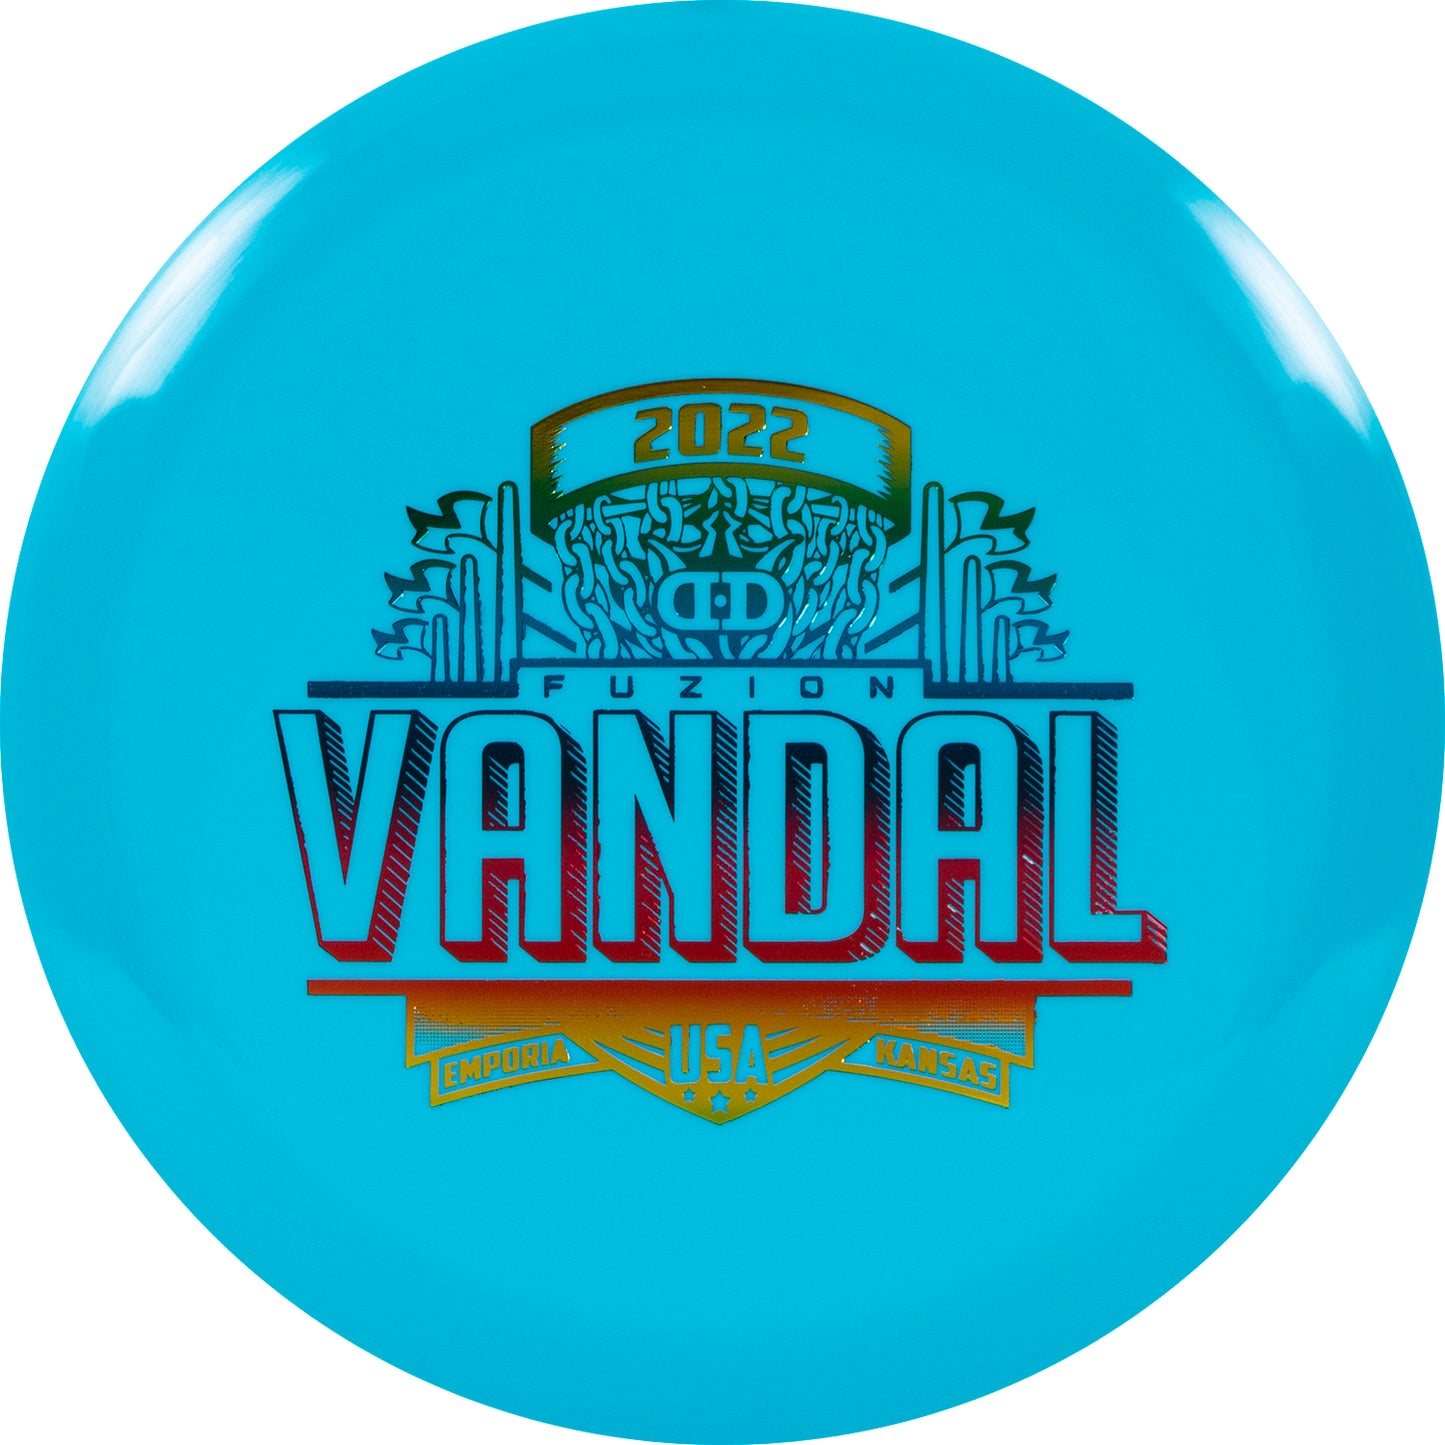 Dynamic Discs Fuzion Vandal Pro Worlds Fundraiser